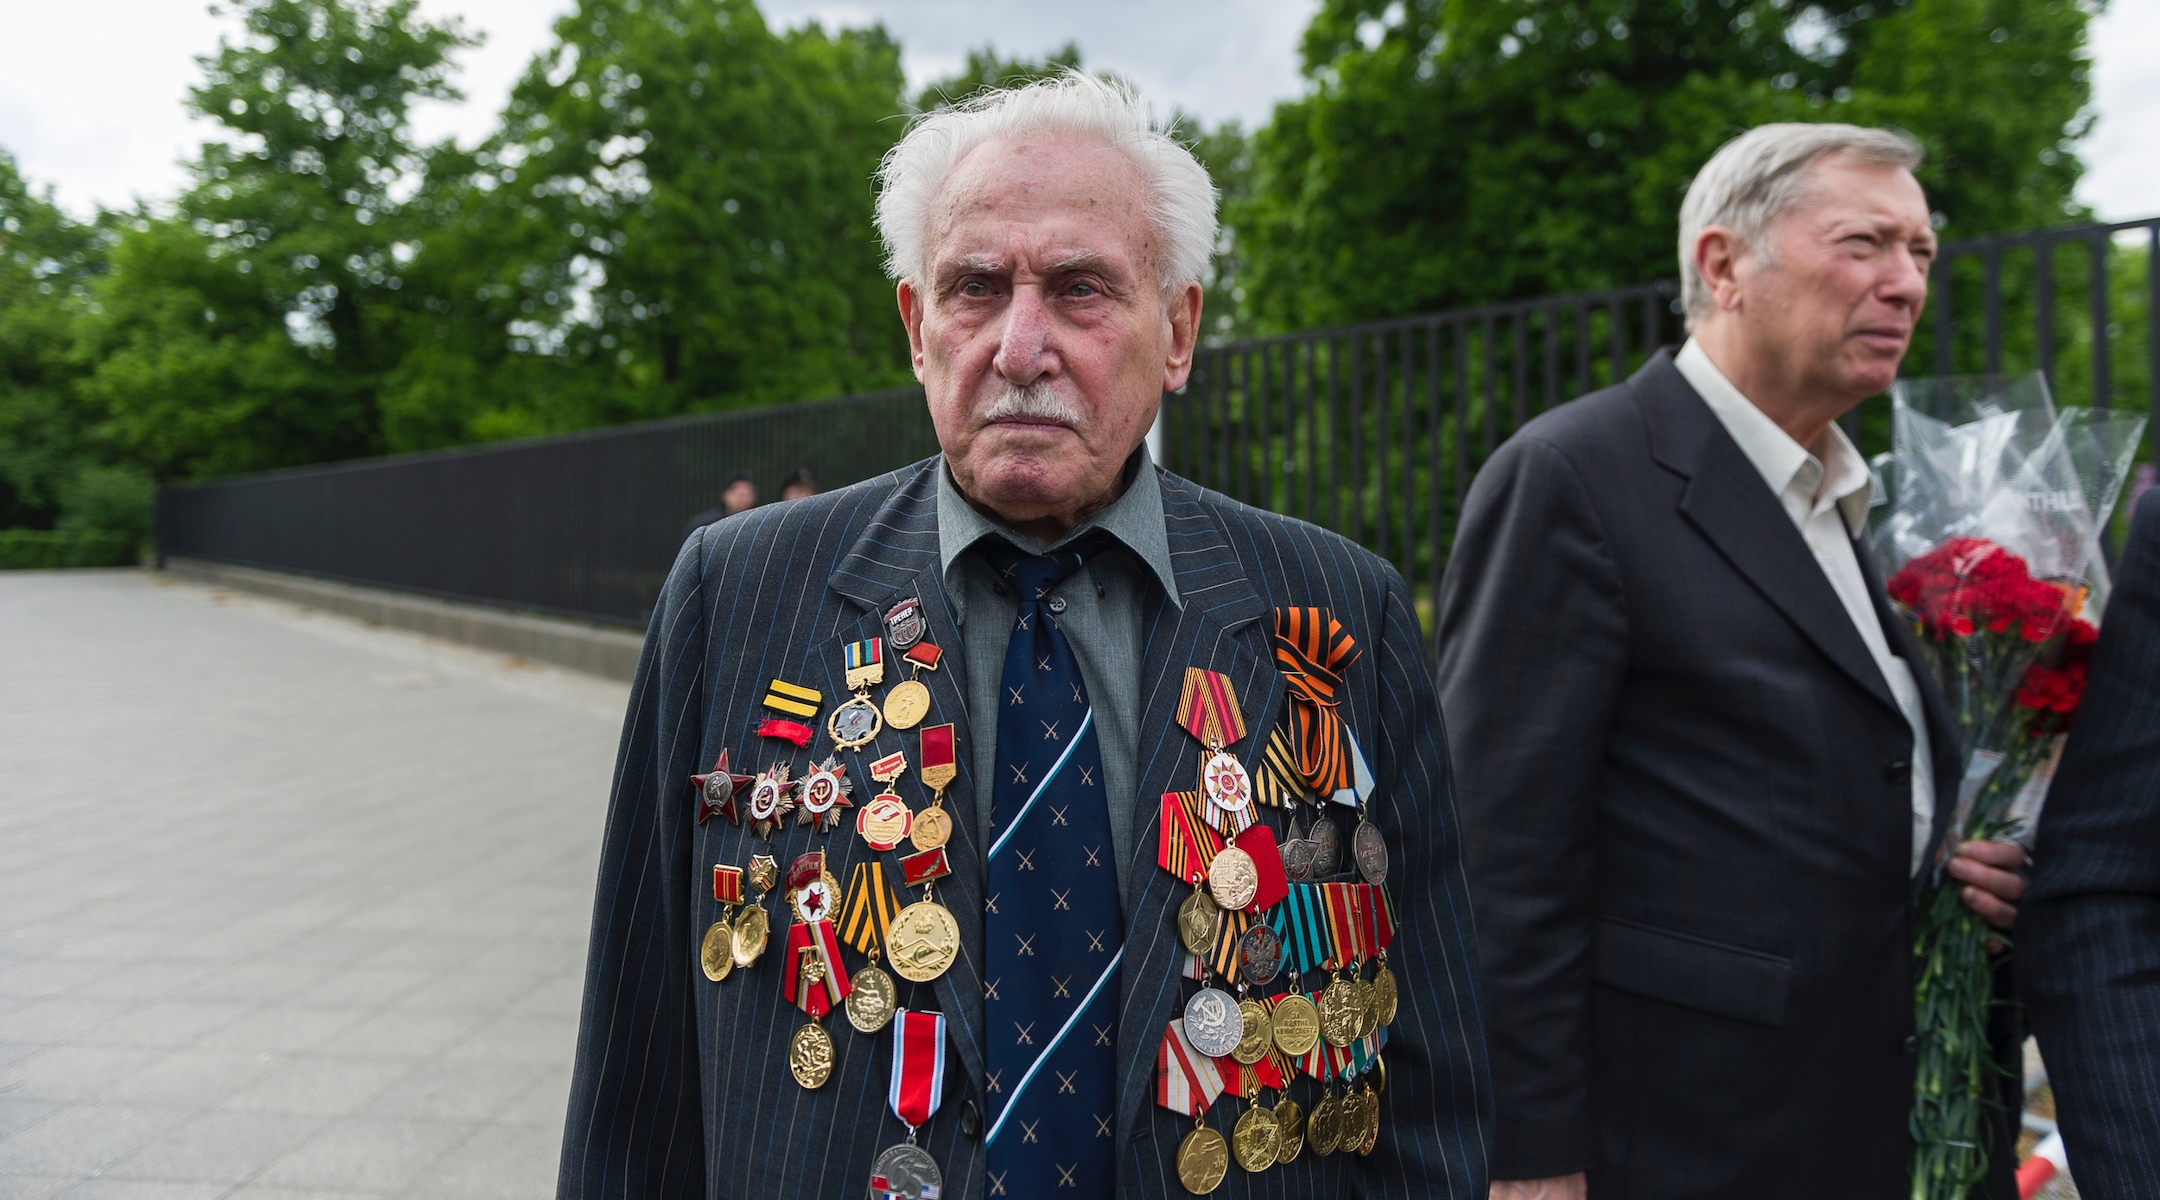 David Dushman at a memorial service in Berlin in 2015. (Markus Heine/NurPhoto/Getty Images)